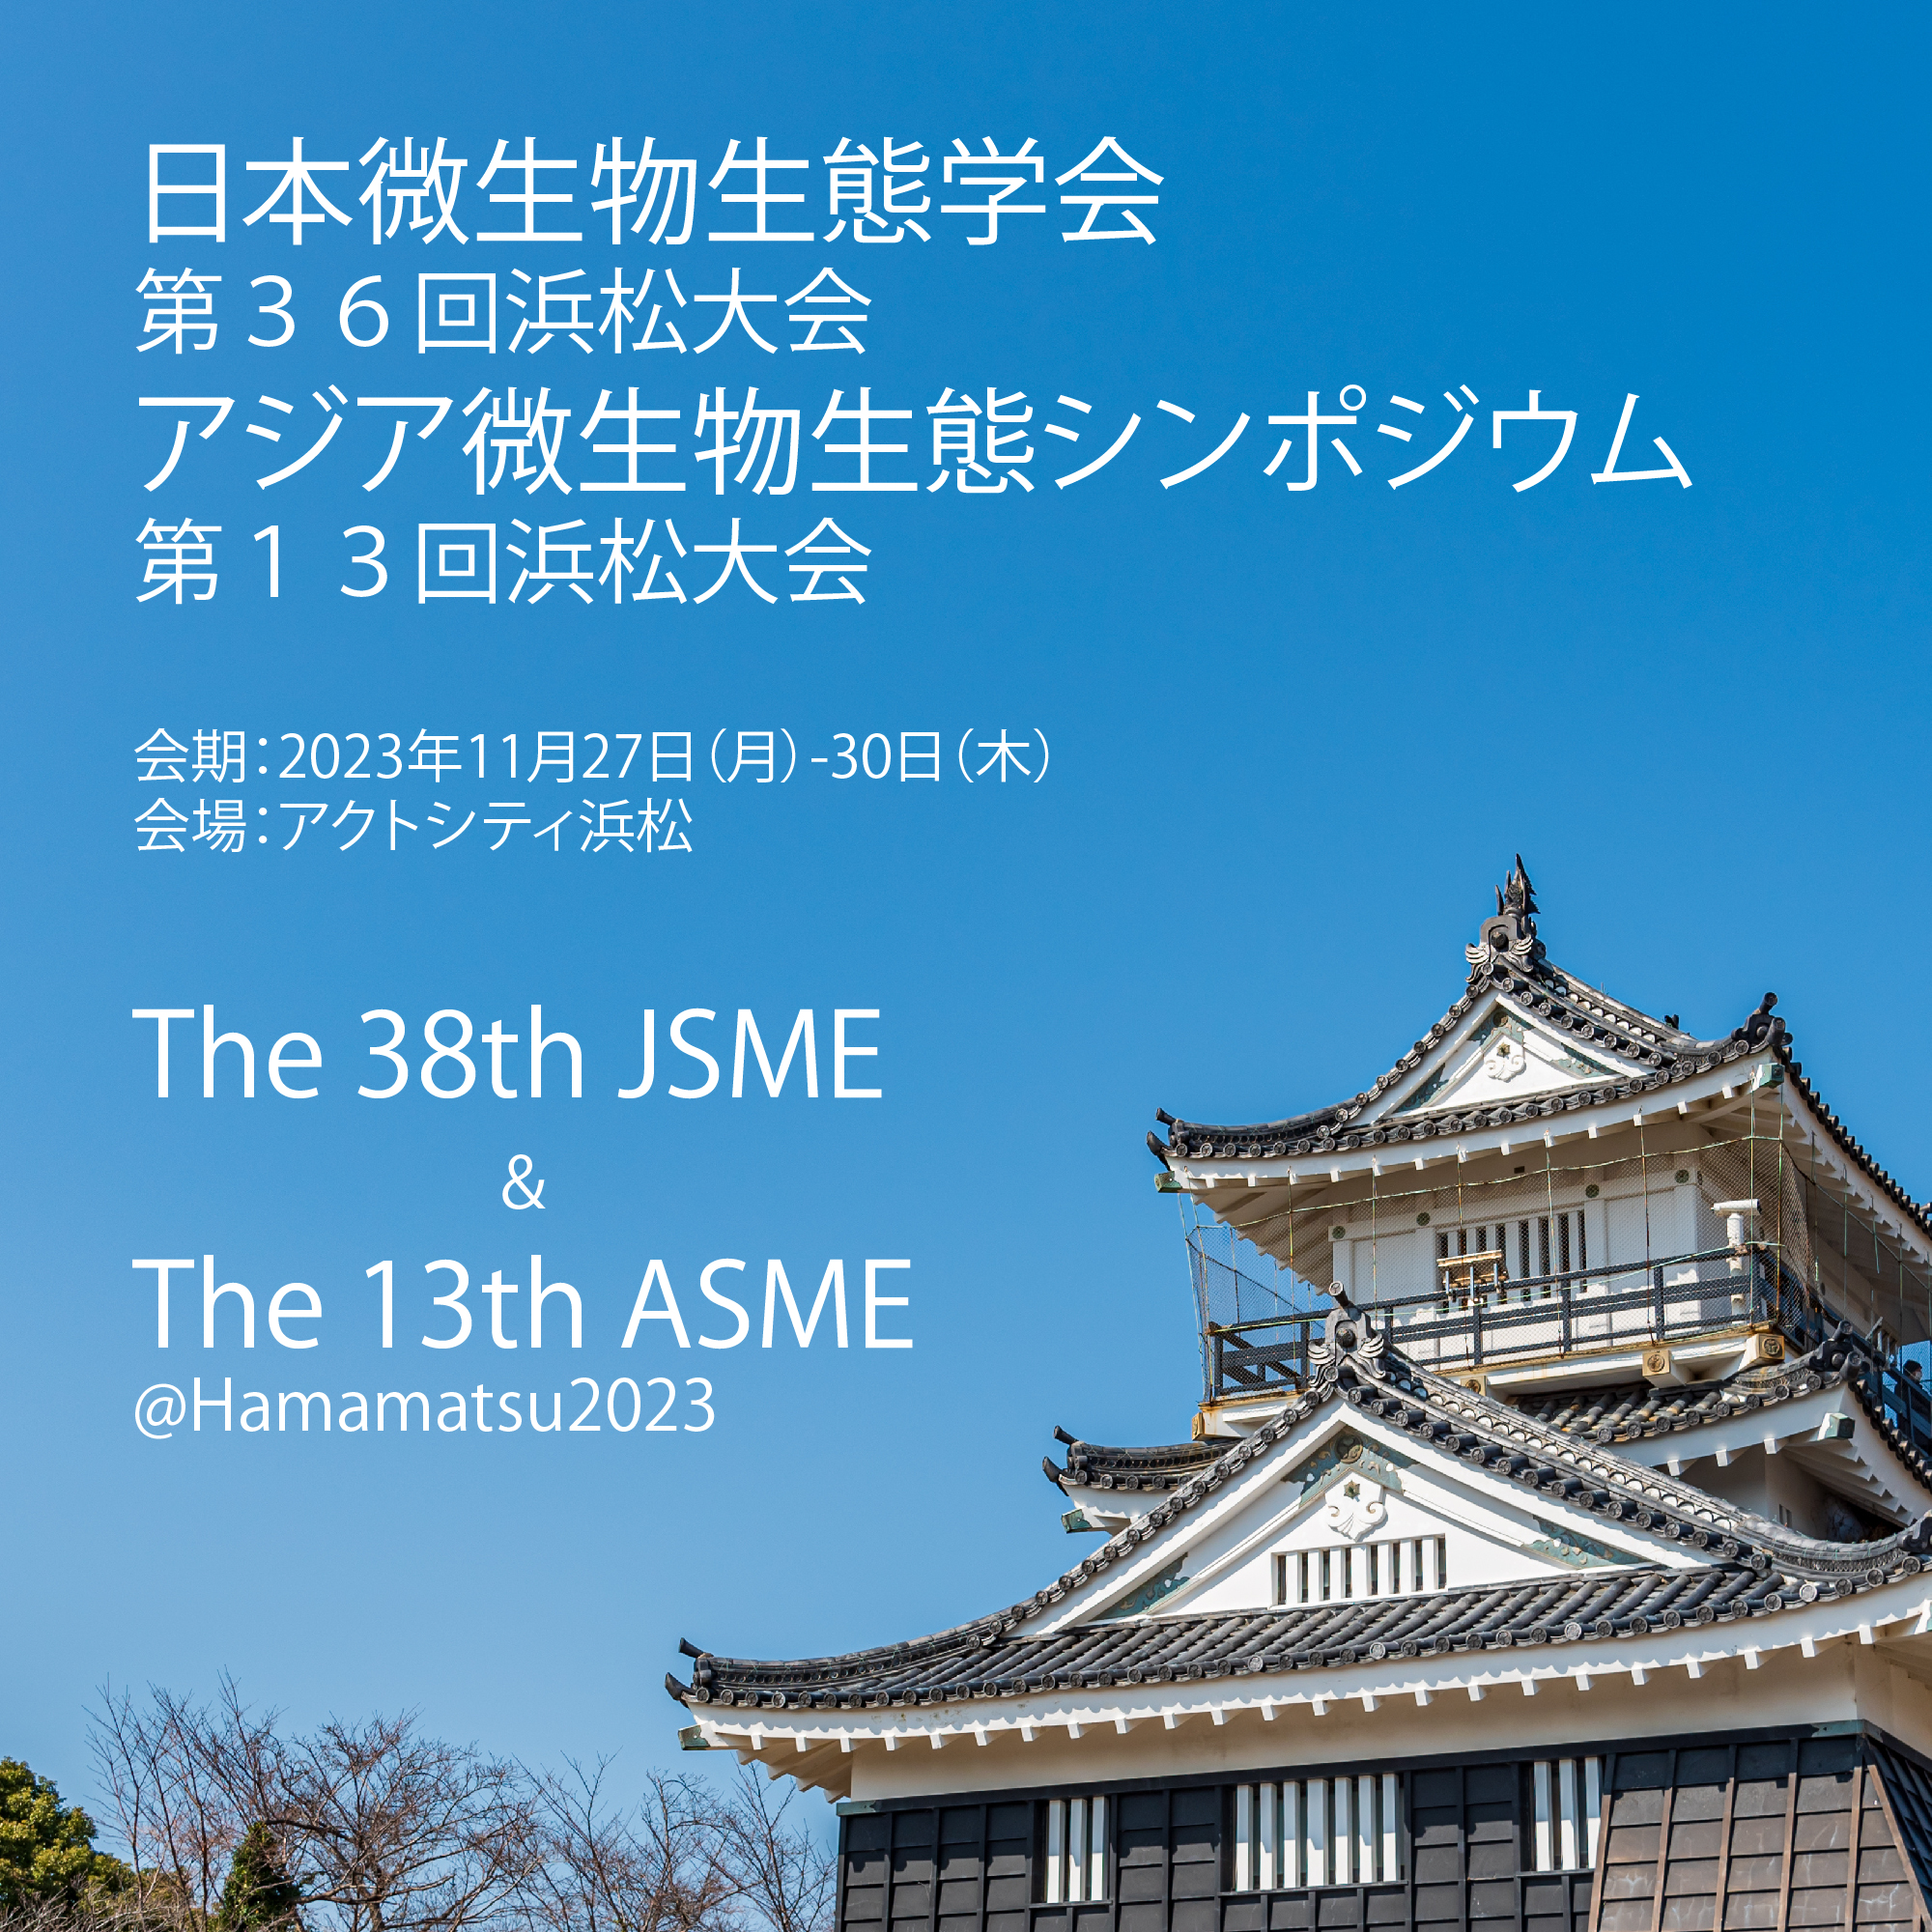 The 36th JSME & The 13th ASME @Hamamatsu